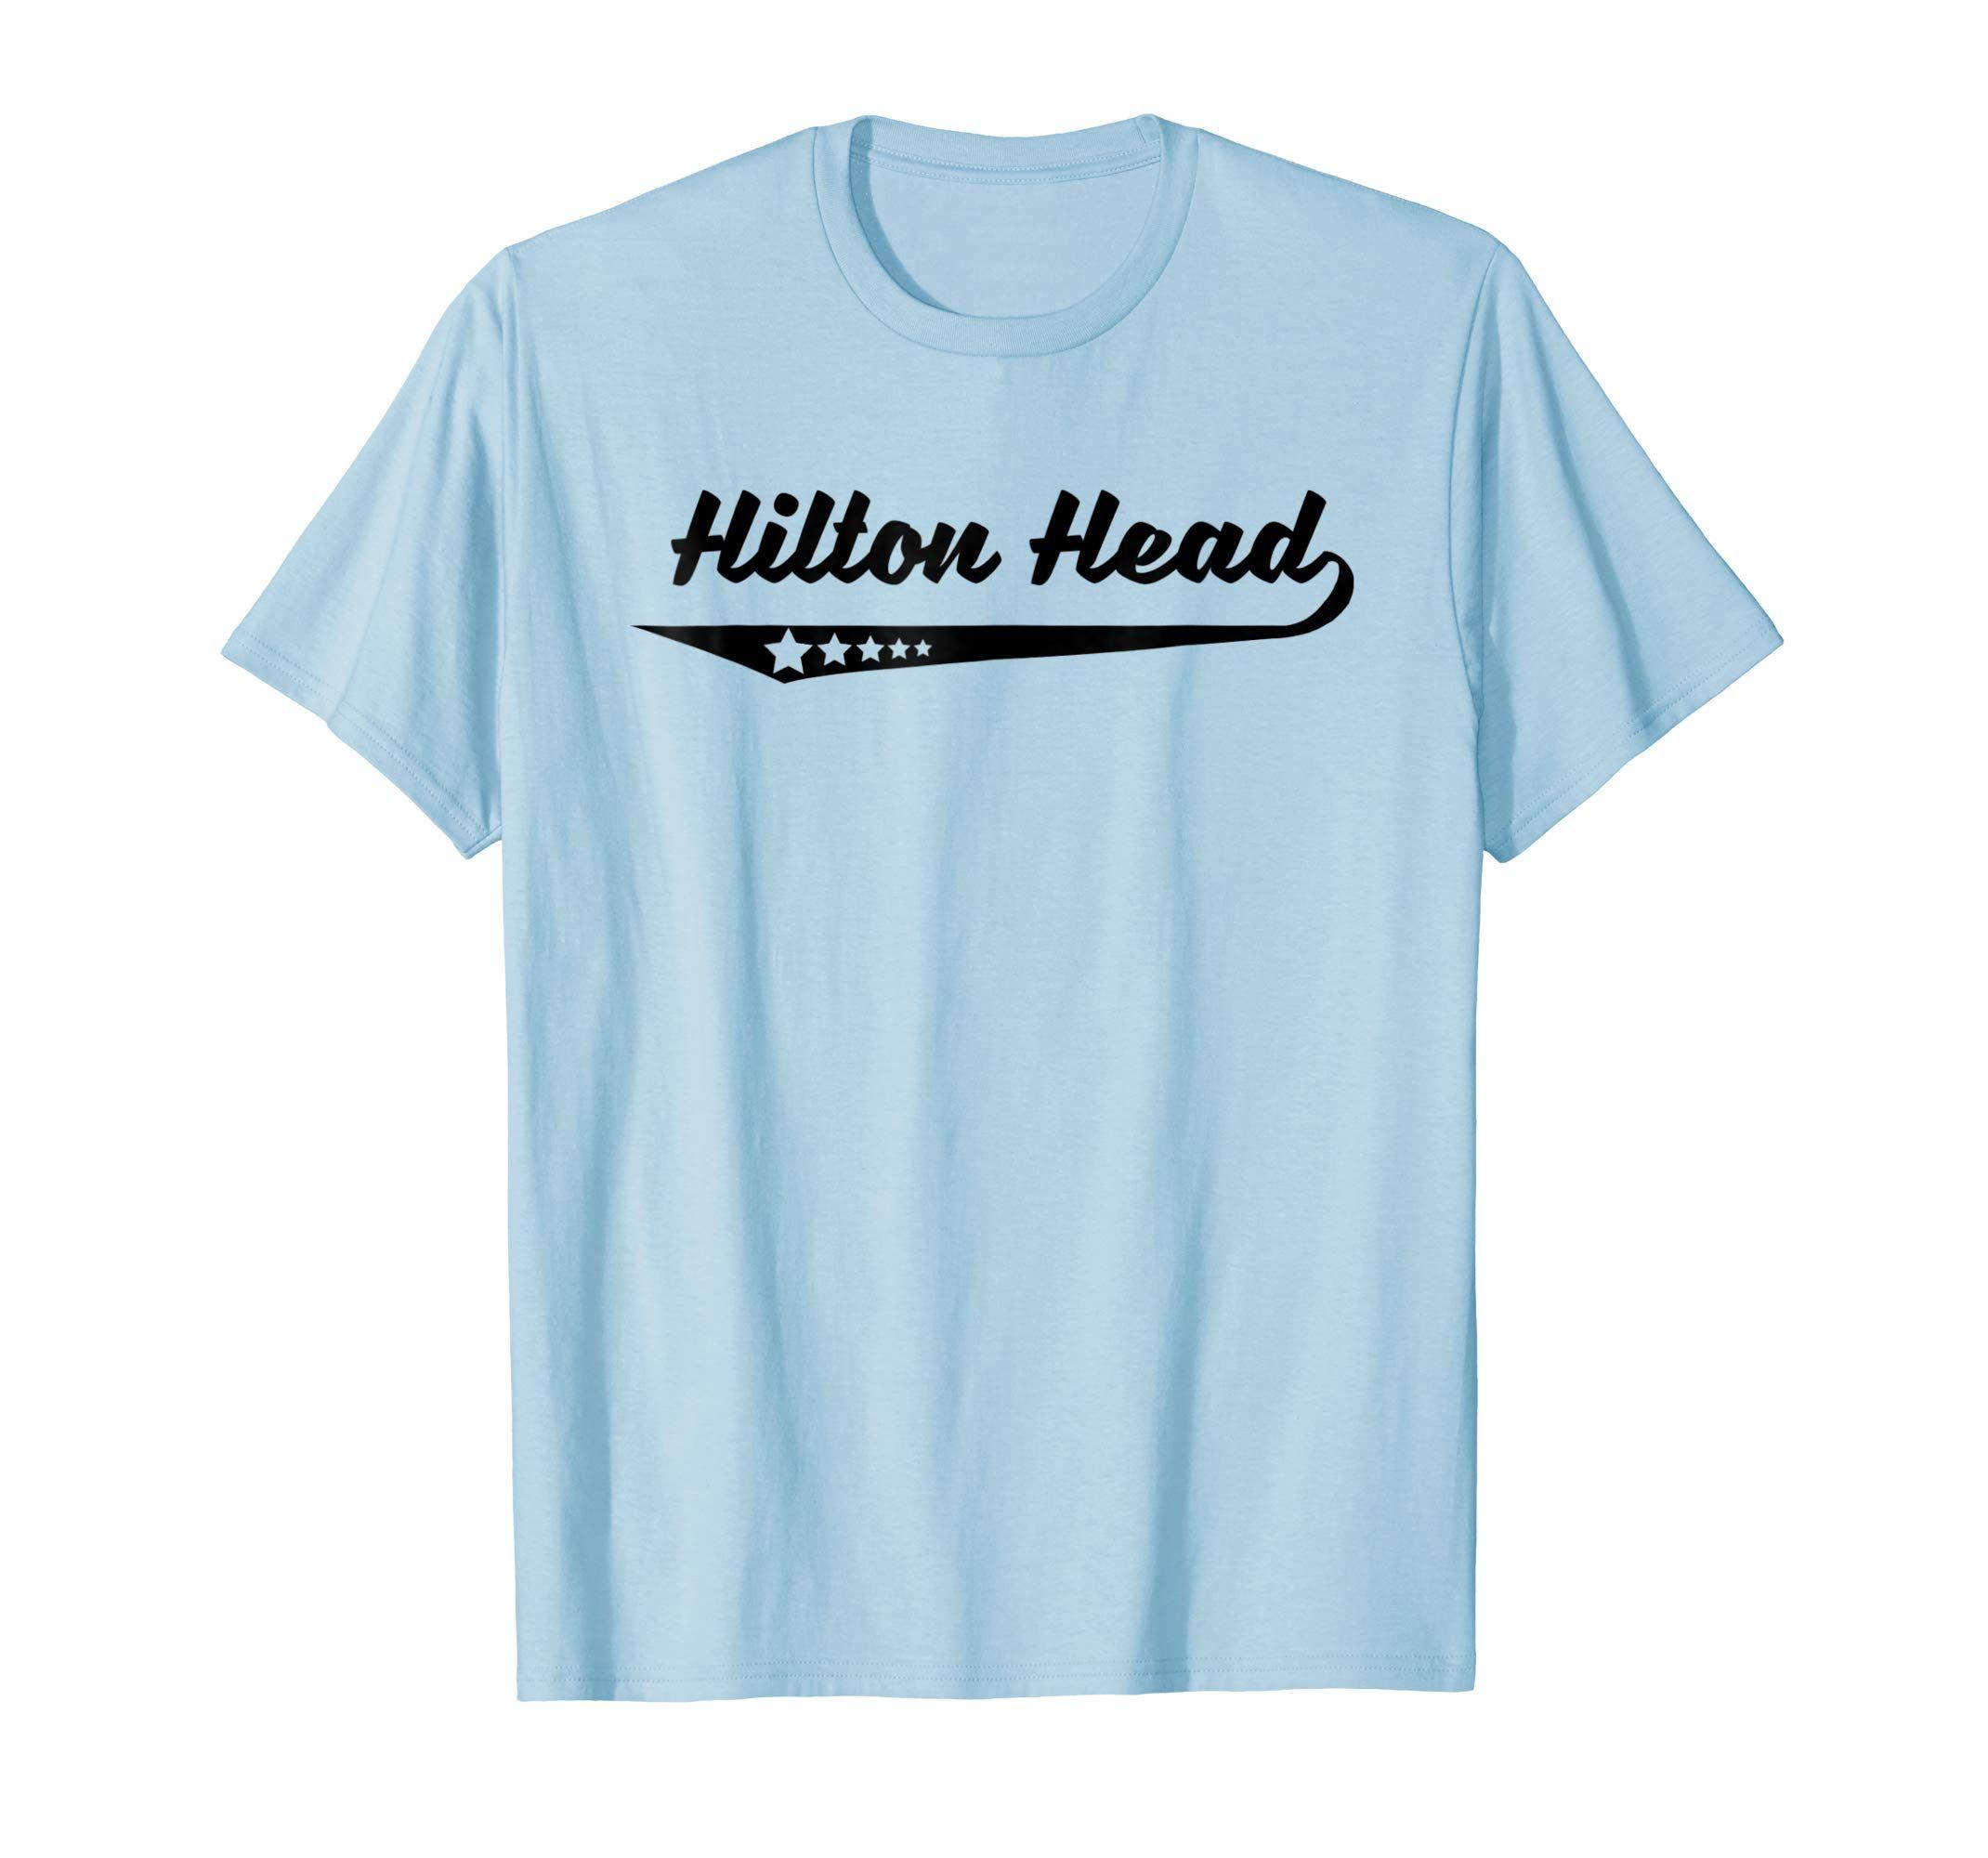 Hilton Clothing Logo - Amazon.com: Vintage Hilton Head SC Stars Logo Retro T-Shirt: Clothing